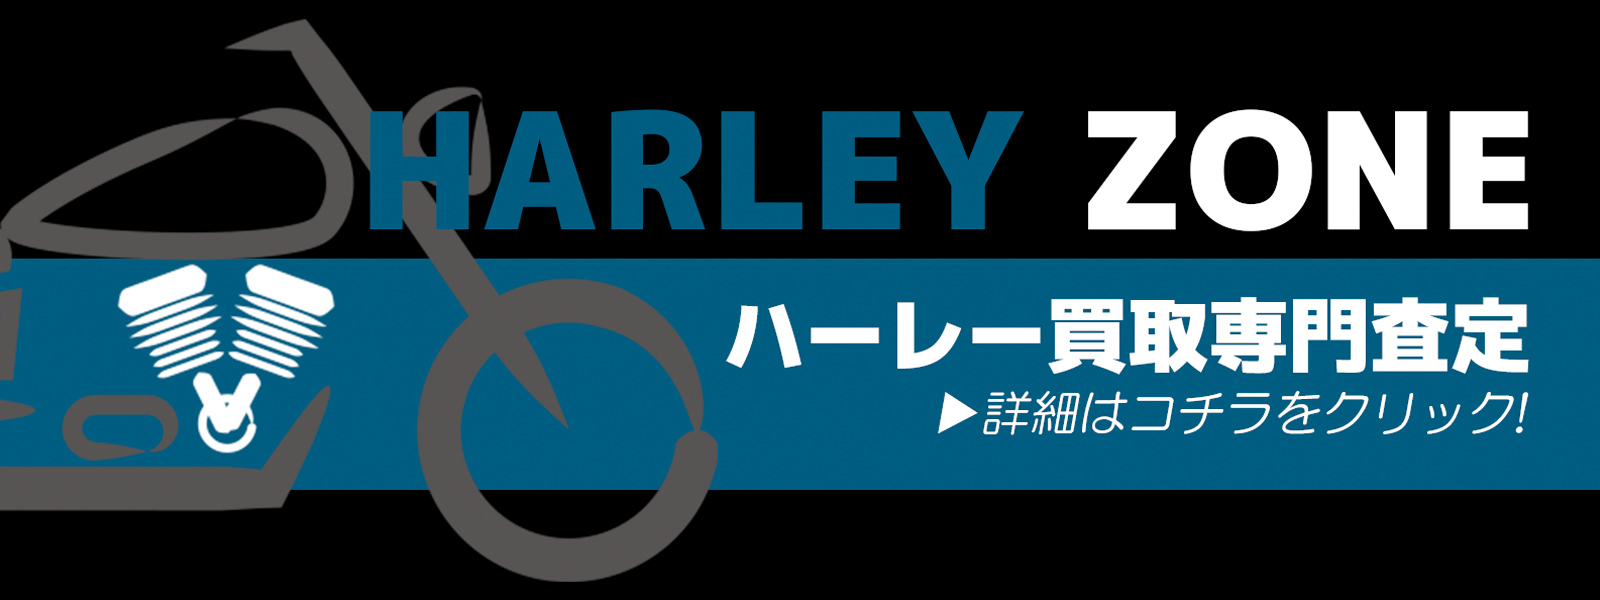 HARLEY ZONE ハーレー買取専門査定